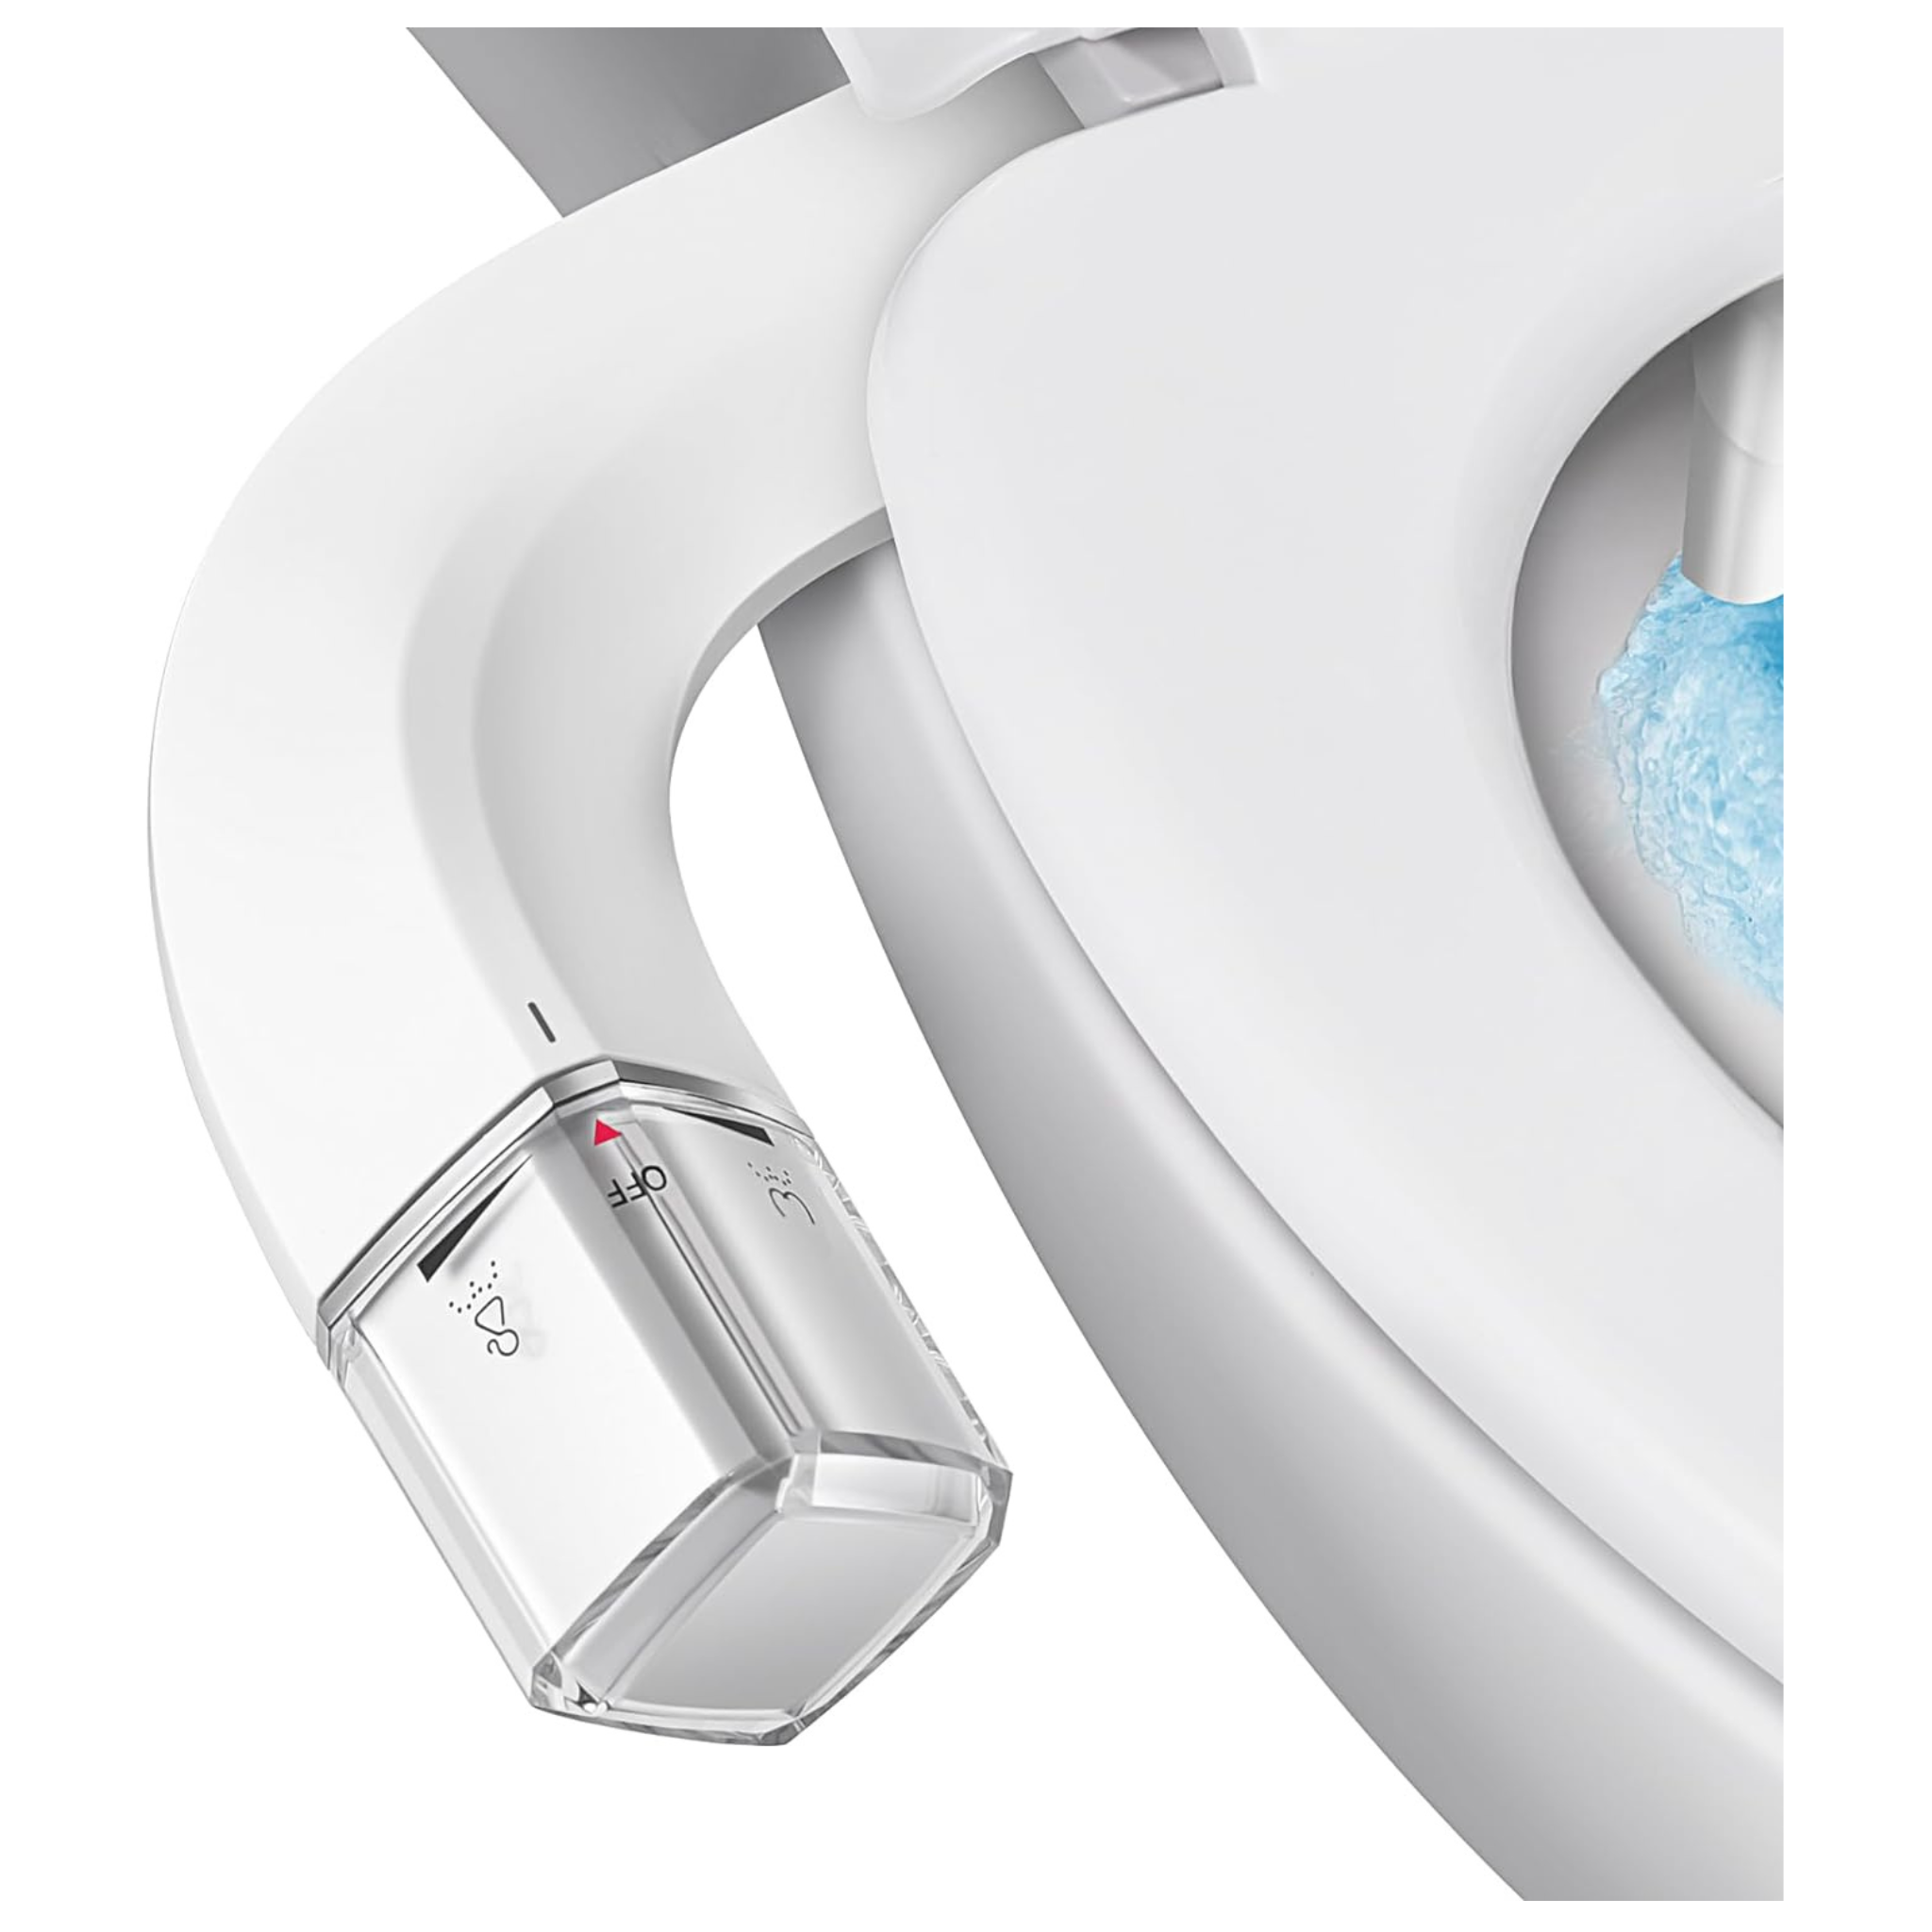 Ultra-Slim Bidet Dual Nozzle Bidet Attachment for Toilet